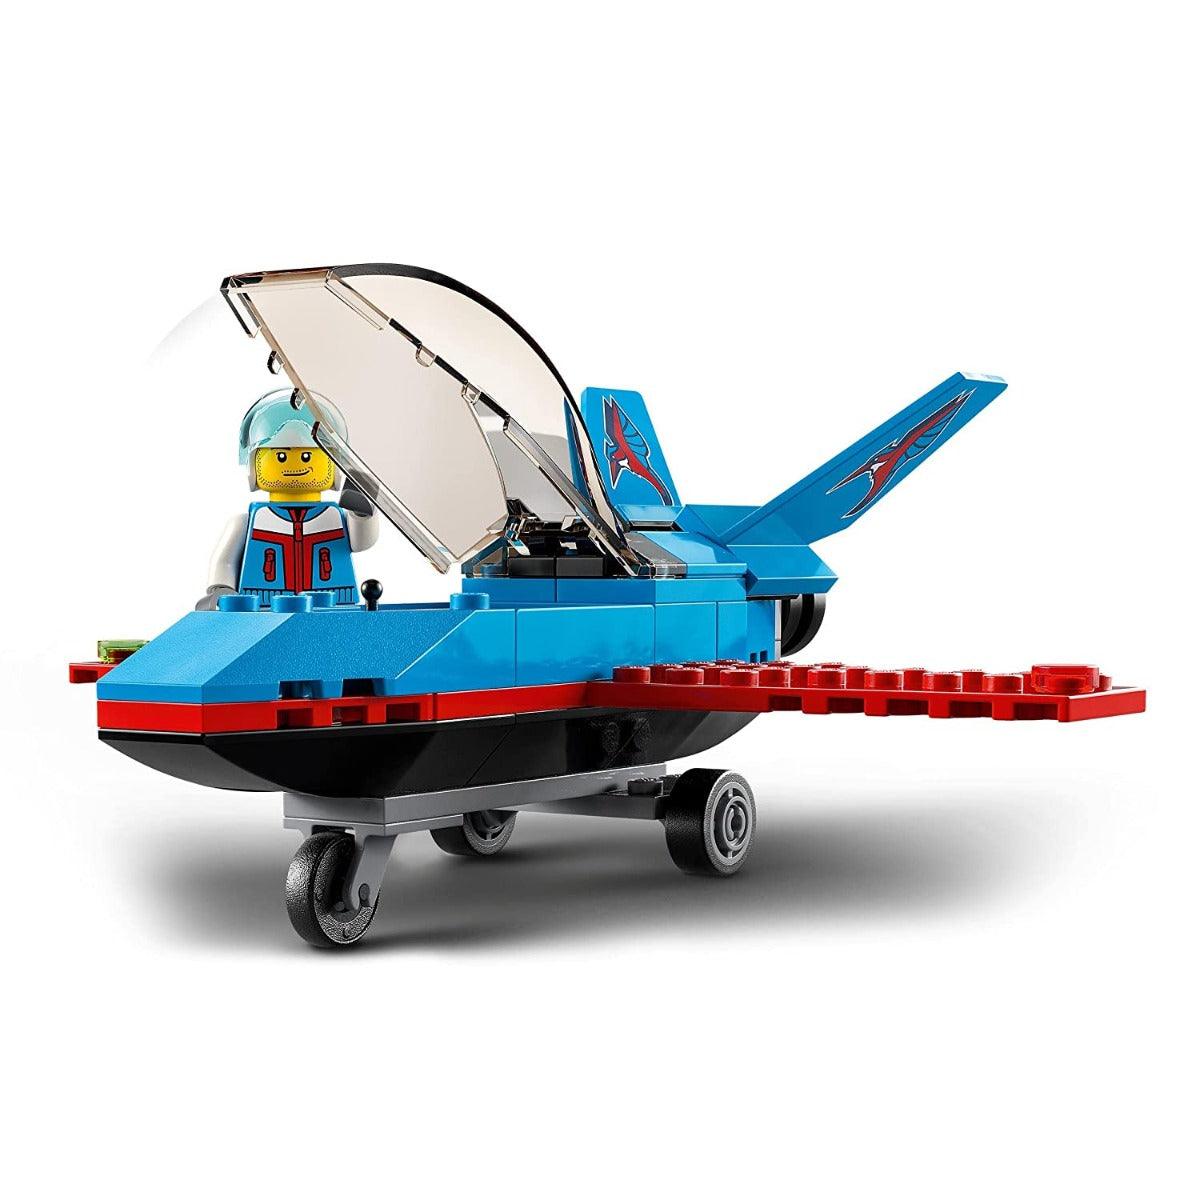 LEGO City Stunt Plane Building Kit for Ages 5+